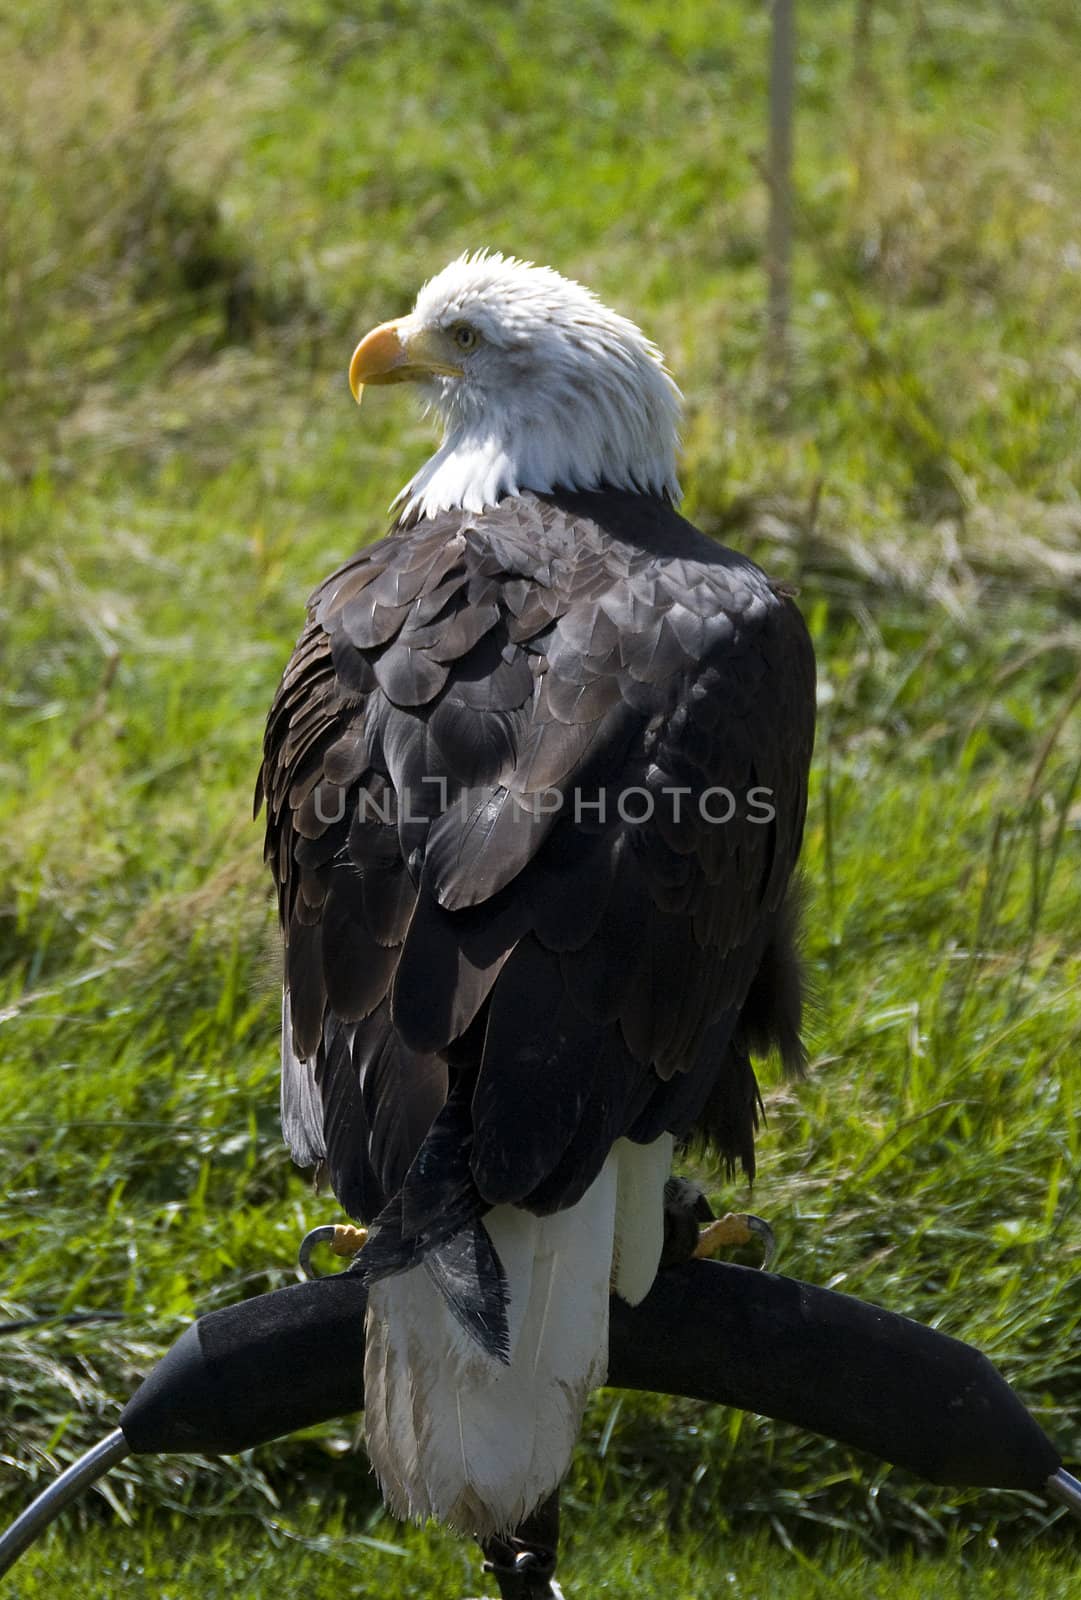 sea eagle by compuinfoto